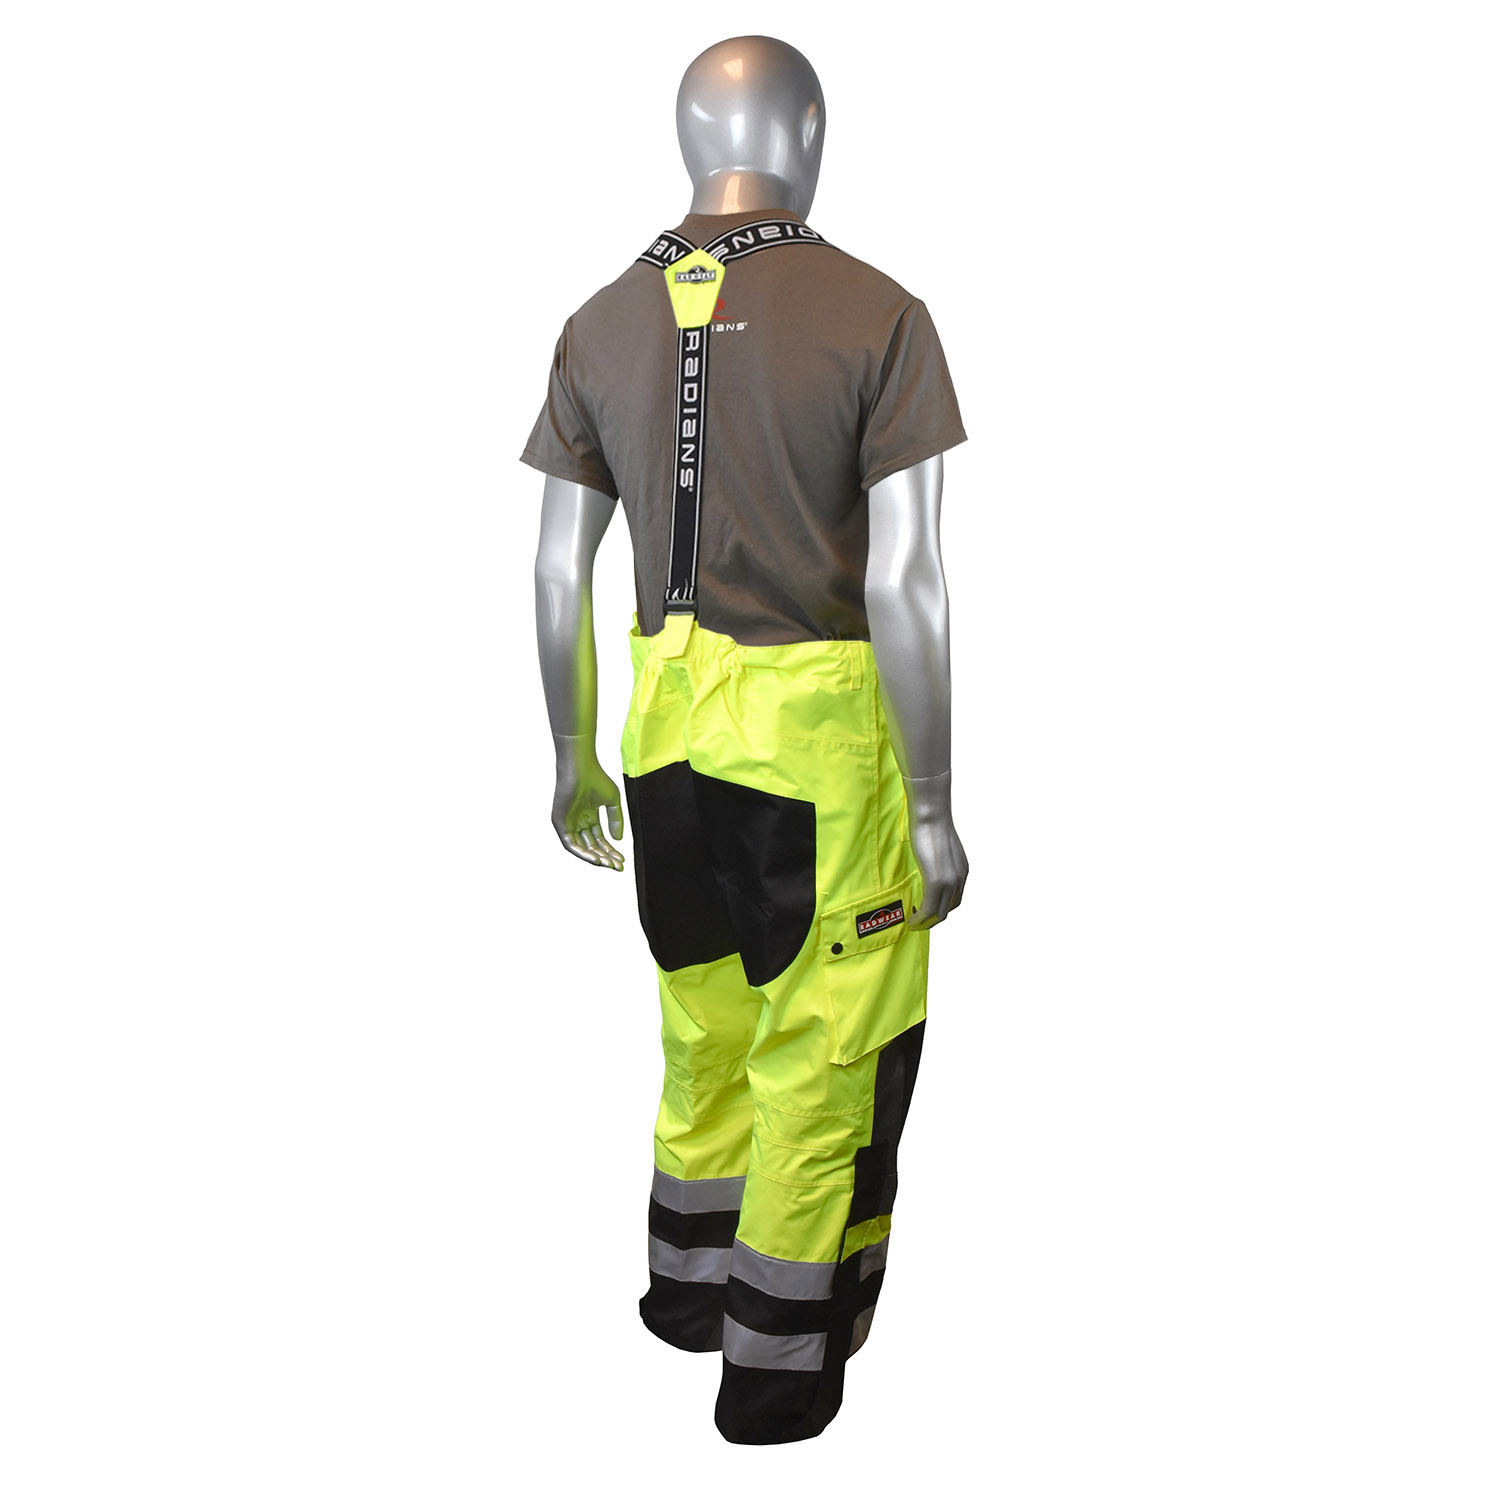 RW32-EZ1Y Heavy Duty Rip Stop Waterproof & Breathable Pants w/Bib - Hi-Vis Green - Size L - Rain Suits